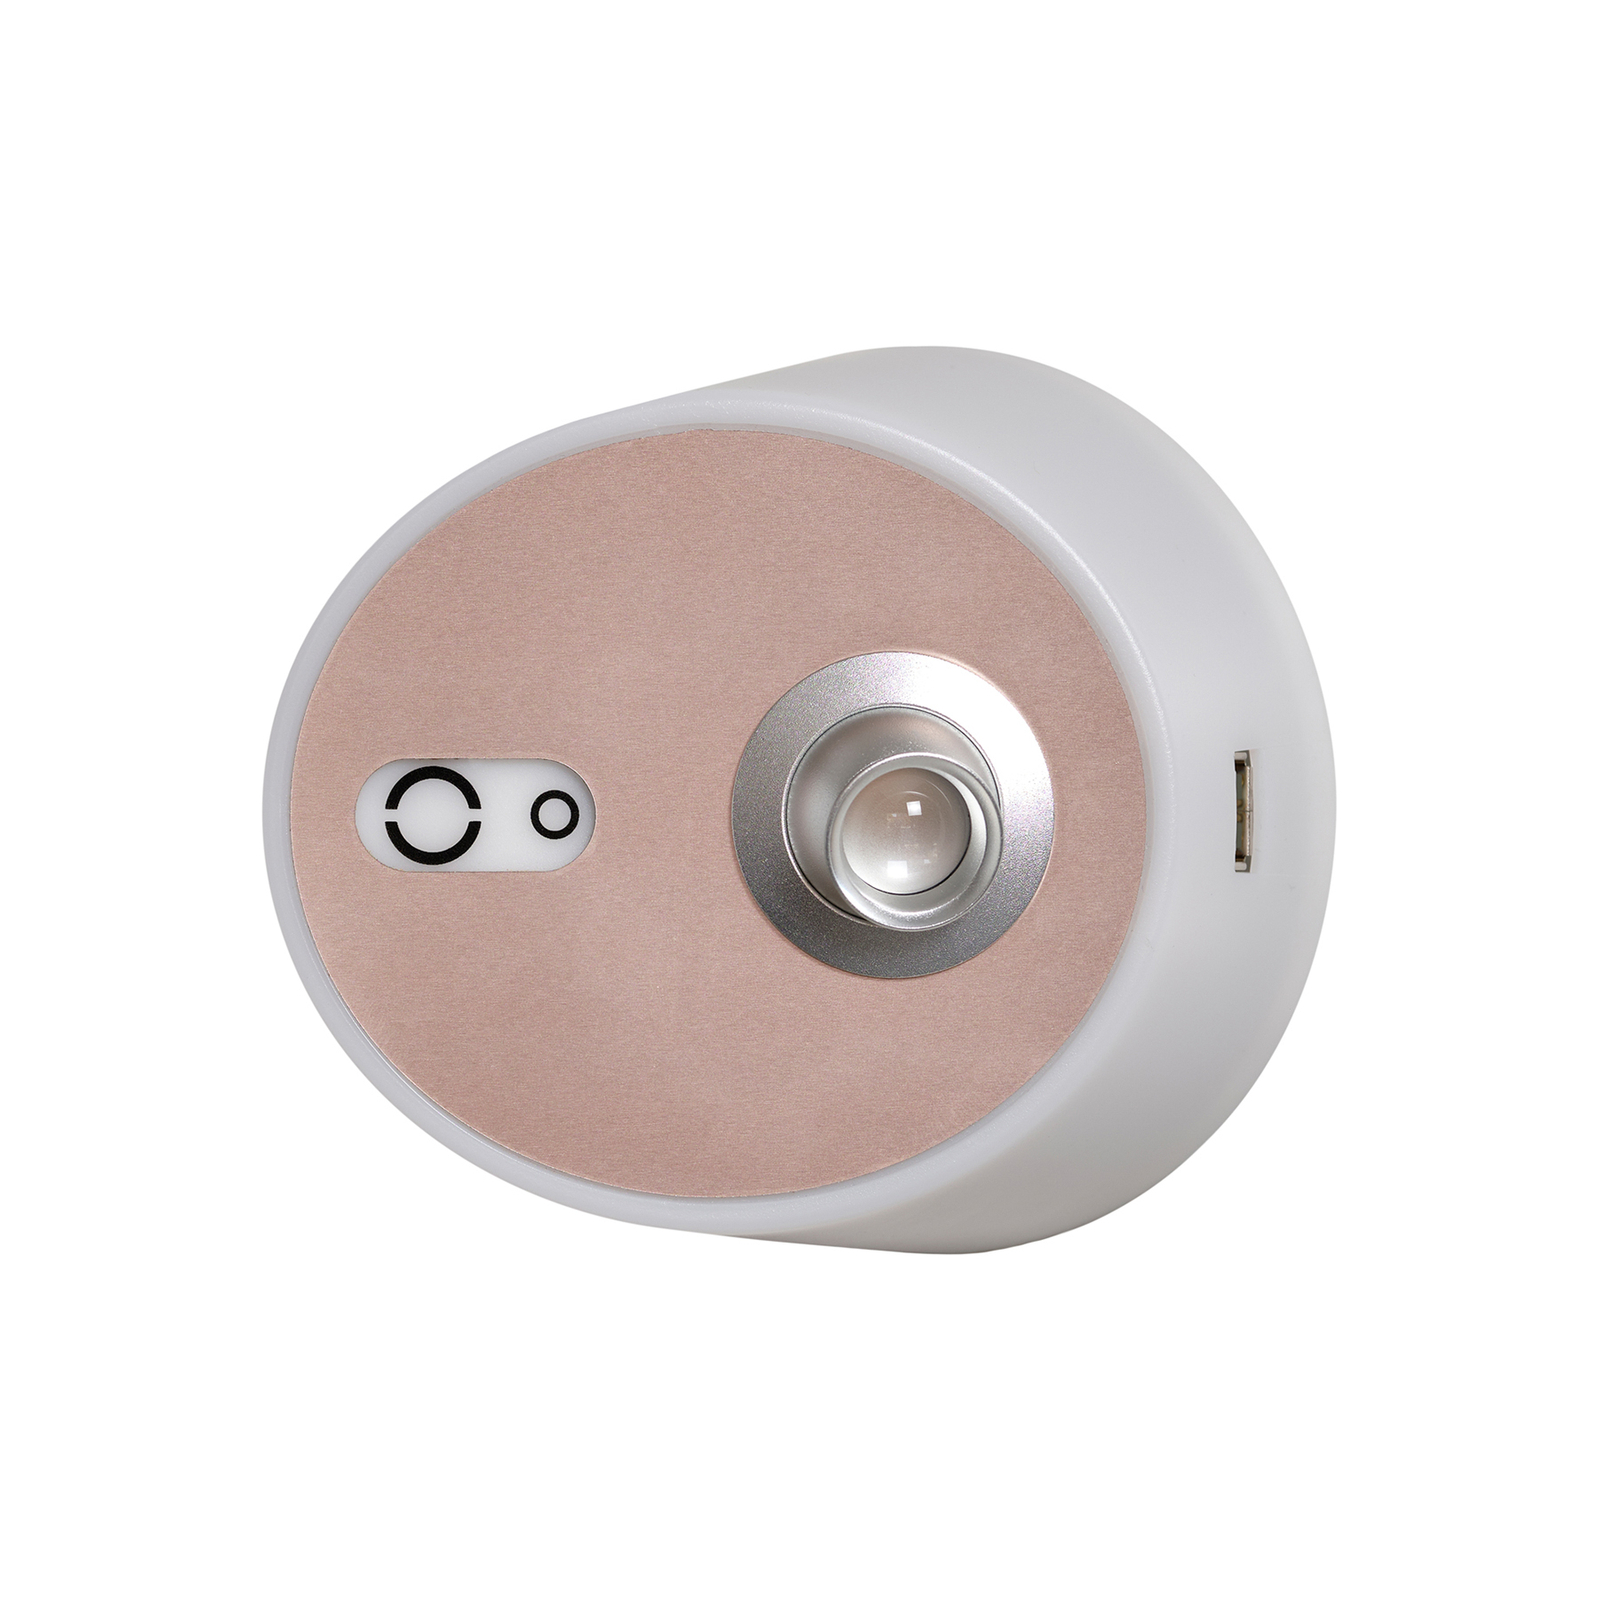 LED-Wandlampe Zoom, Spot, USB-Ausgang, pink-kupfer